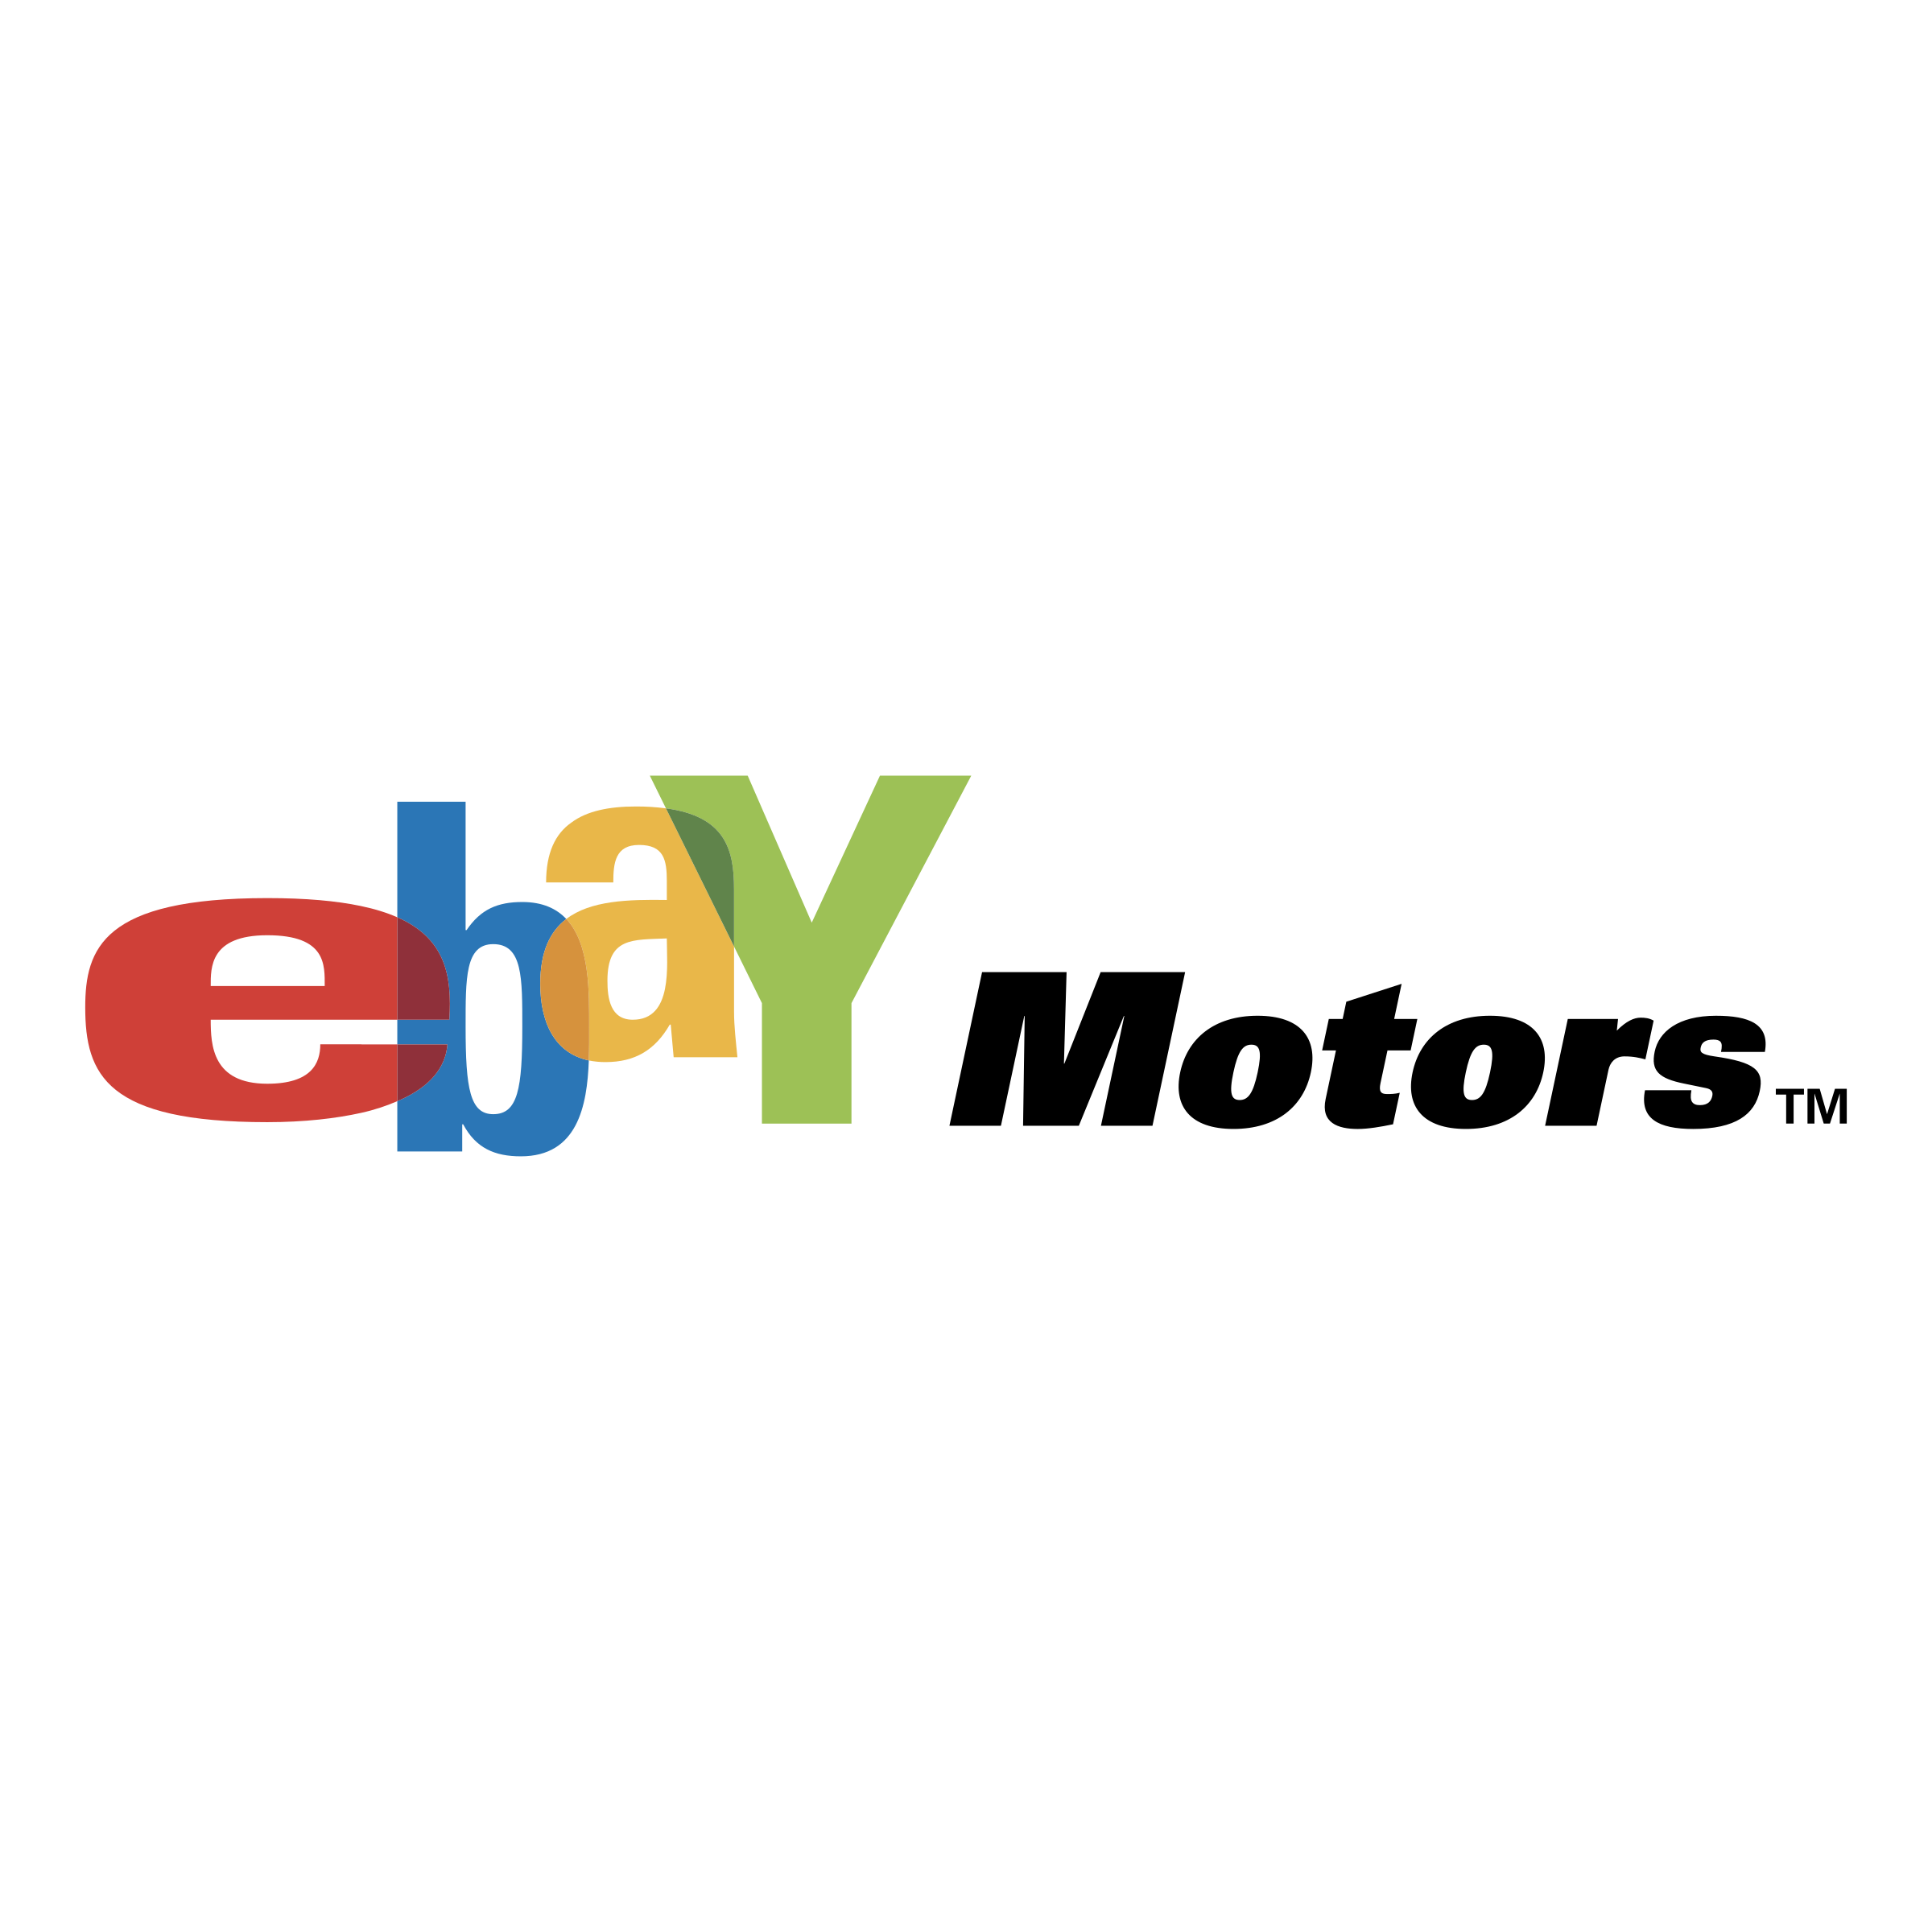 Ebay logo PNG immagine sfondo Trasparente